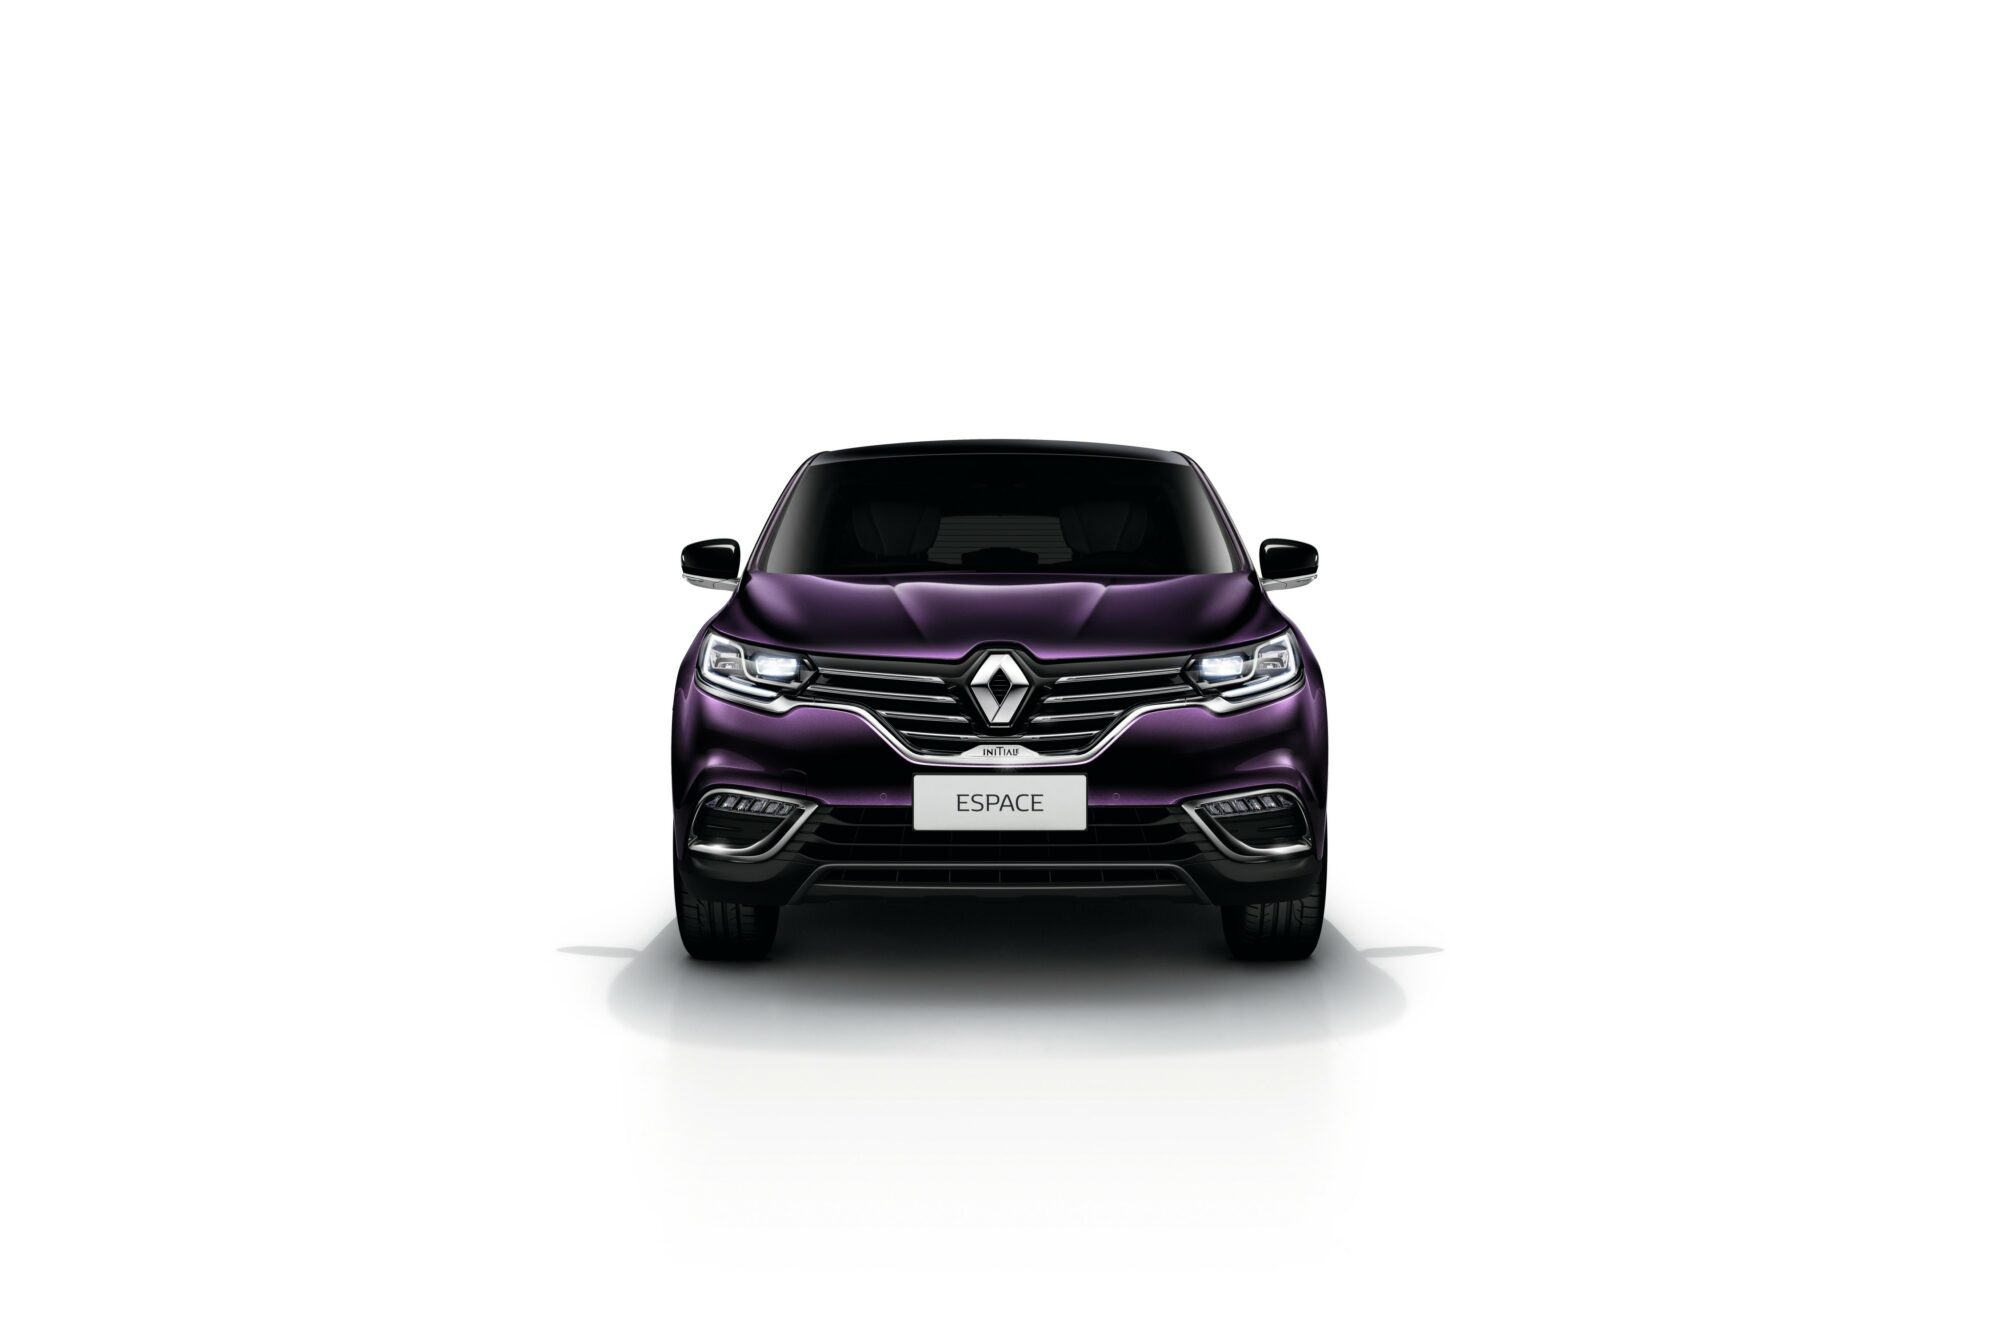 2017 - New Renault ESPACE INITIALE PARIS China version